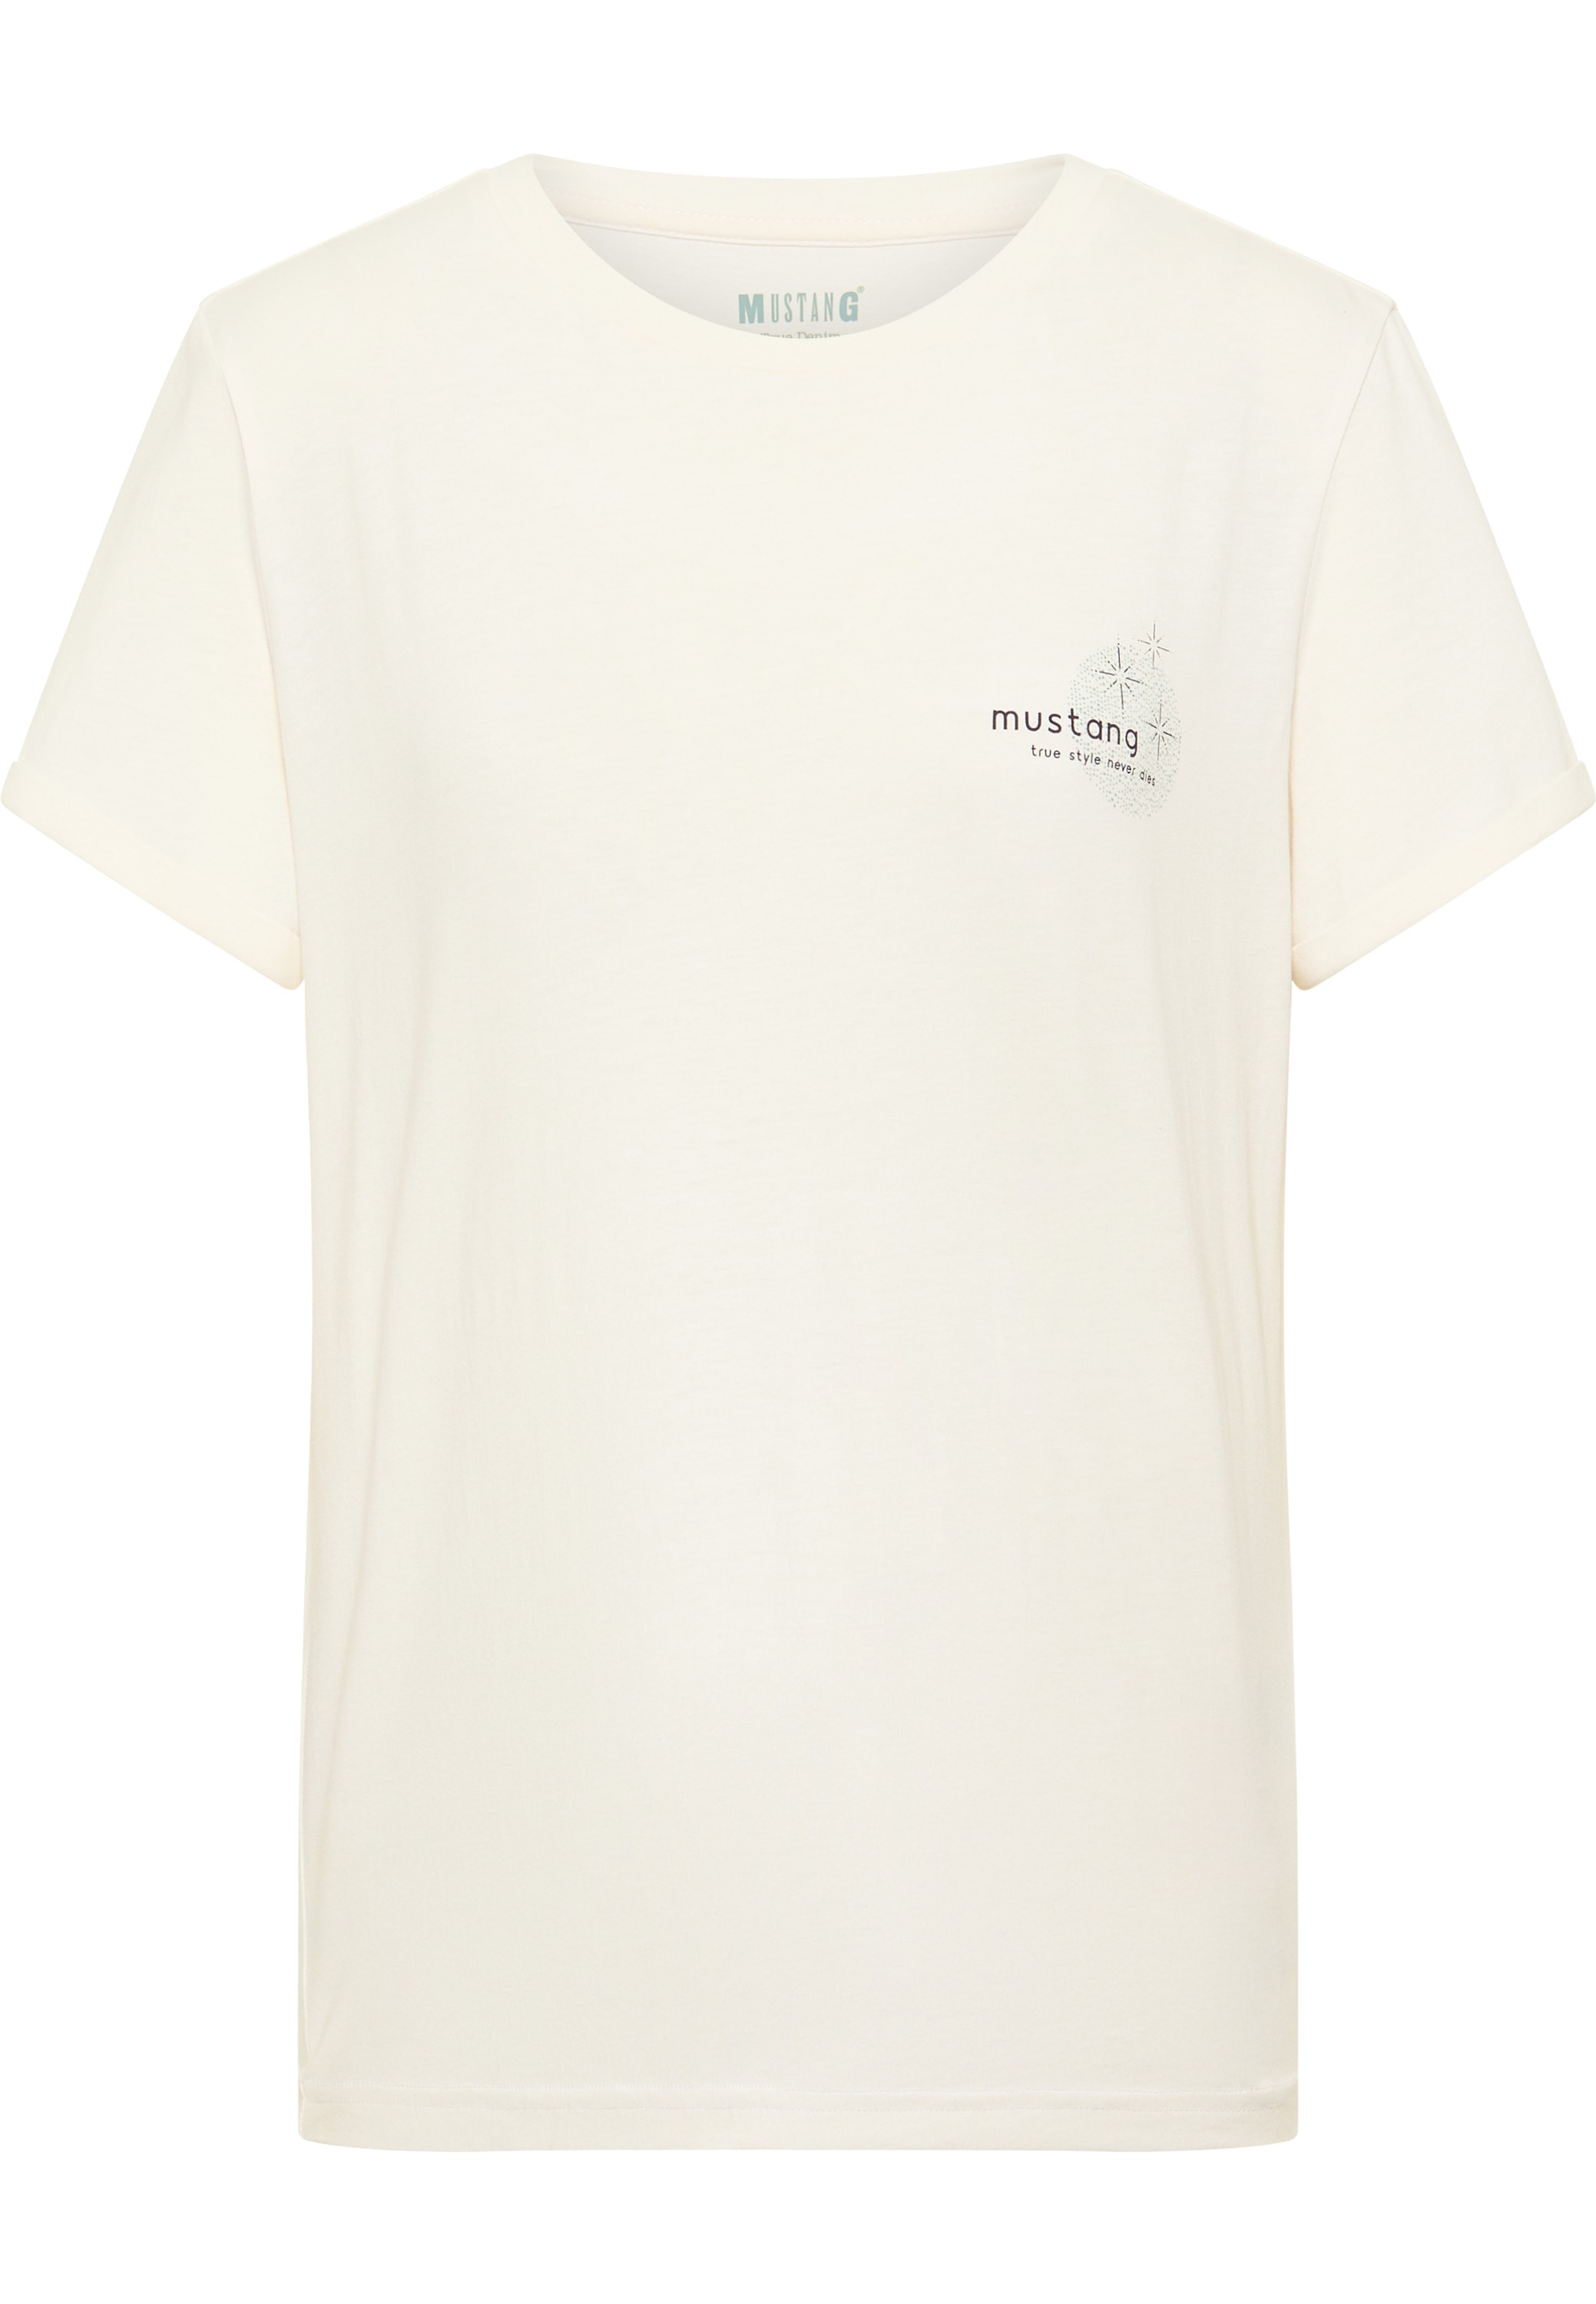 »Mustang Kurzarmshirt C MUSTANG Alina kaufen Style T-Shirt Chestprint«